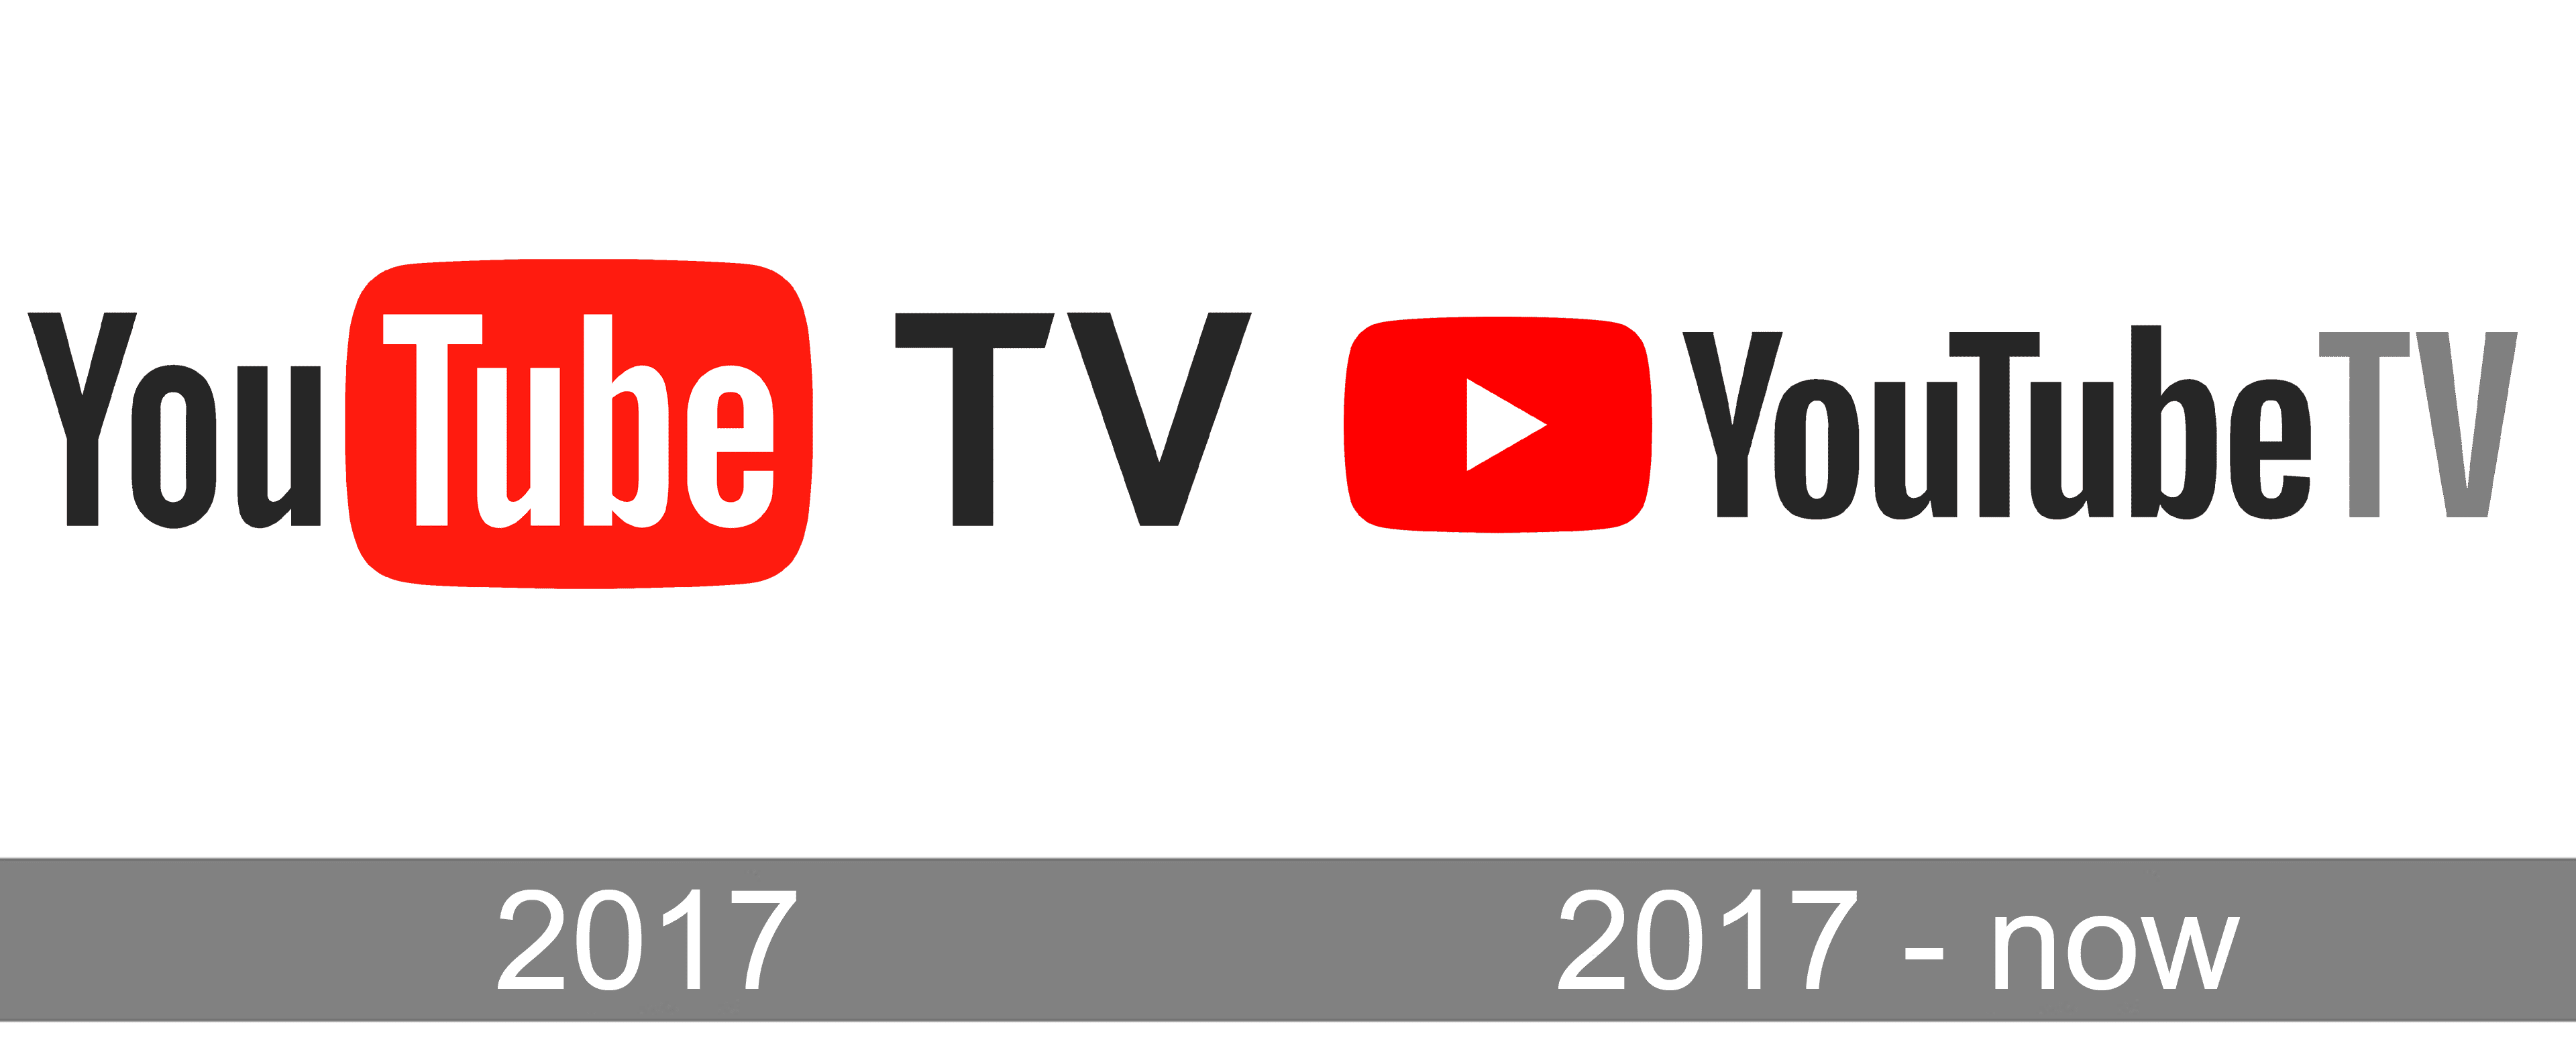 Free Youtube Shorts Logo SVG, PNG Icon, Symbol. Download Image.